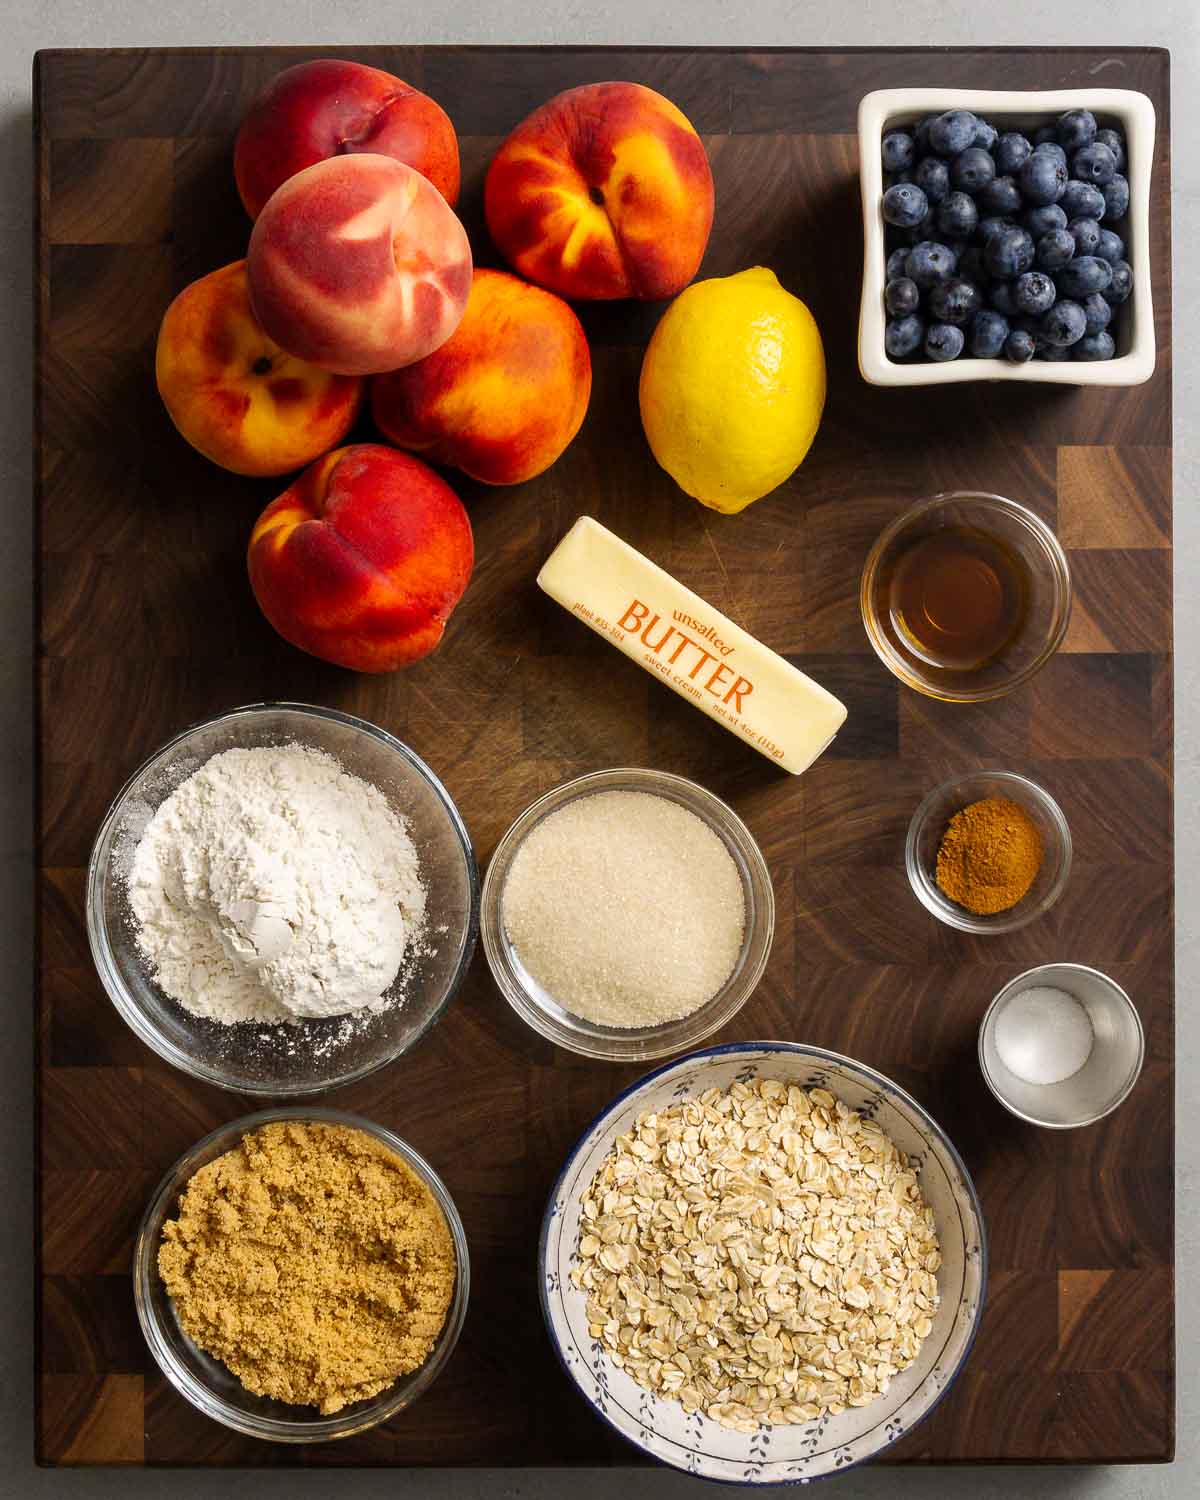 Ingredients shown: peaches, lemon, blueberries, flour, sugar, butter, vanilla, cinnamon, salt, brown sugar, and oats.